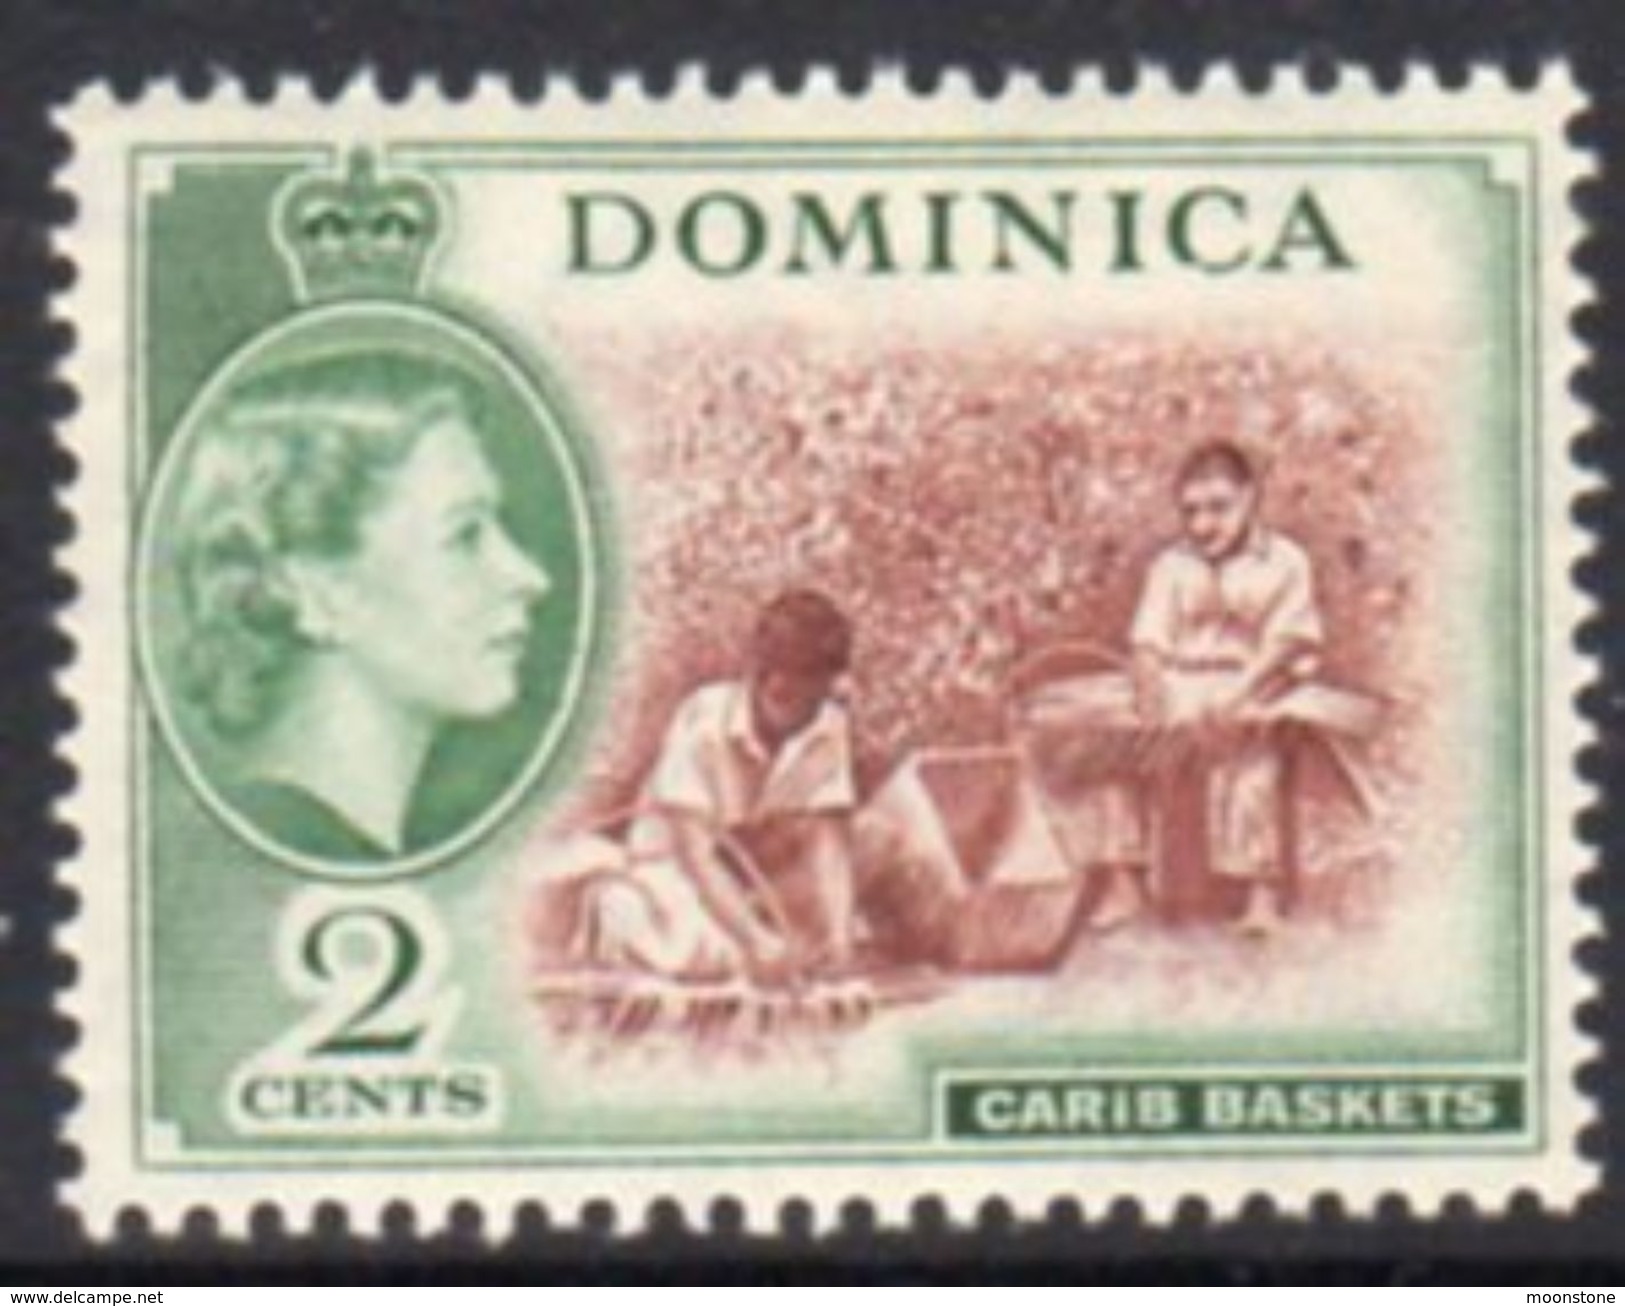 Dominica 1954-62 QEII 2c Carib Baskets Definitive, MNH, SG 142 - Dominica (...-1978)